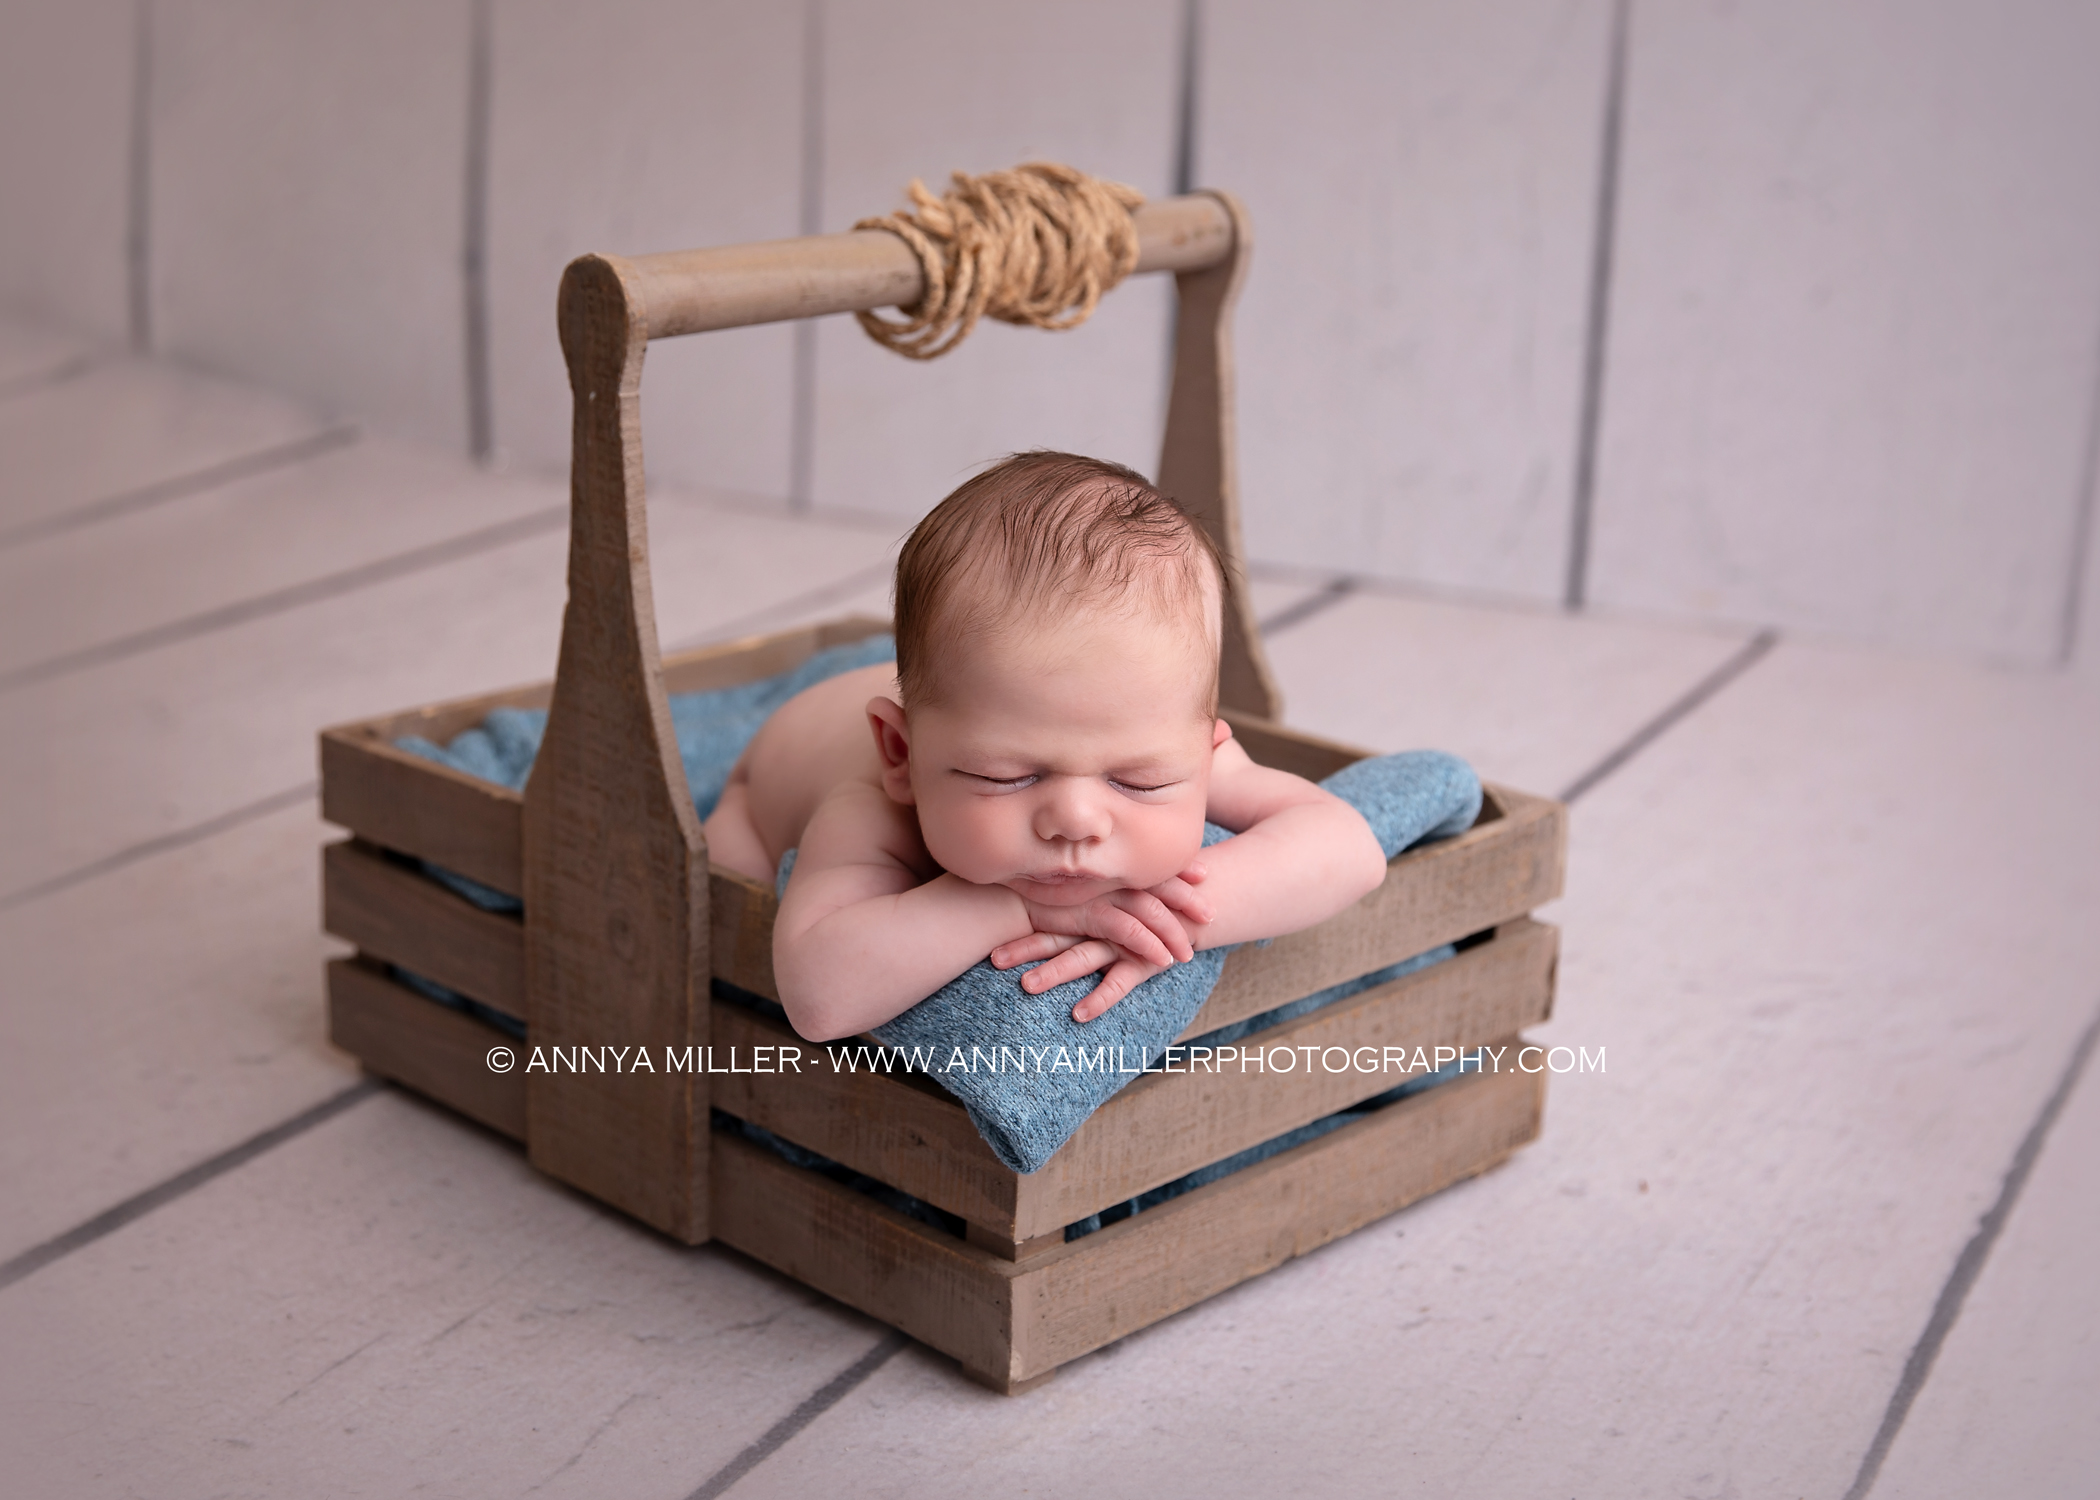 Portraits of baby boy sleeping in rustic crate by ajax newborn photographer Annya miller 